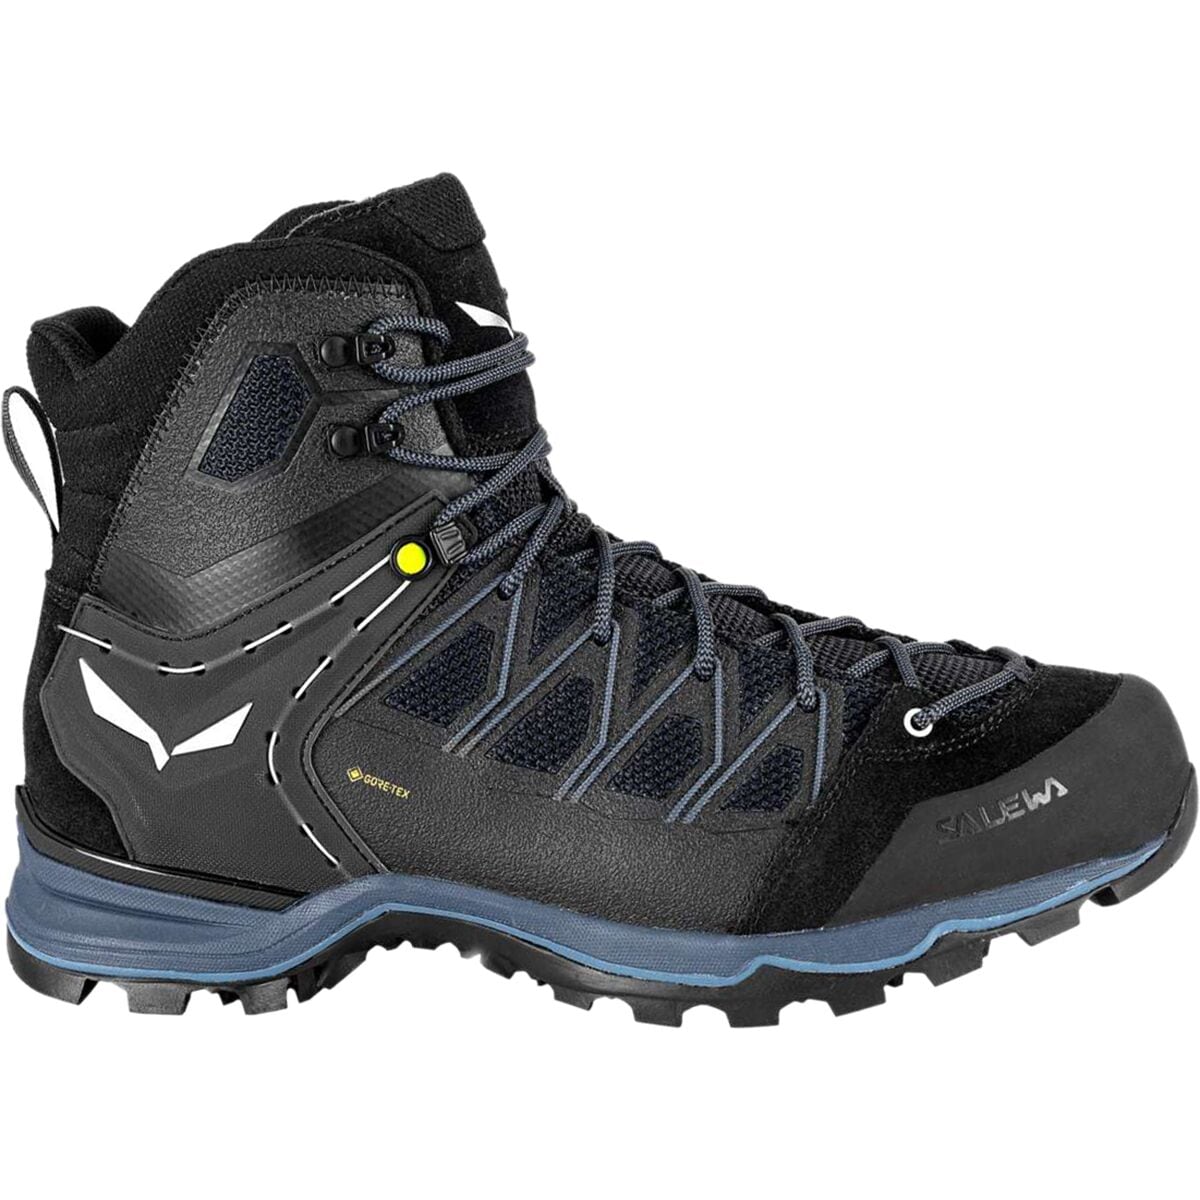 Mountain Trainer Lite Mid GTX Hiking Boot - Men